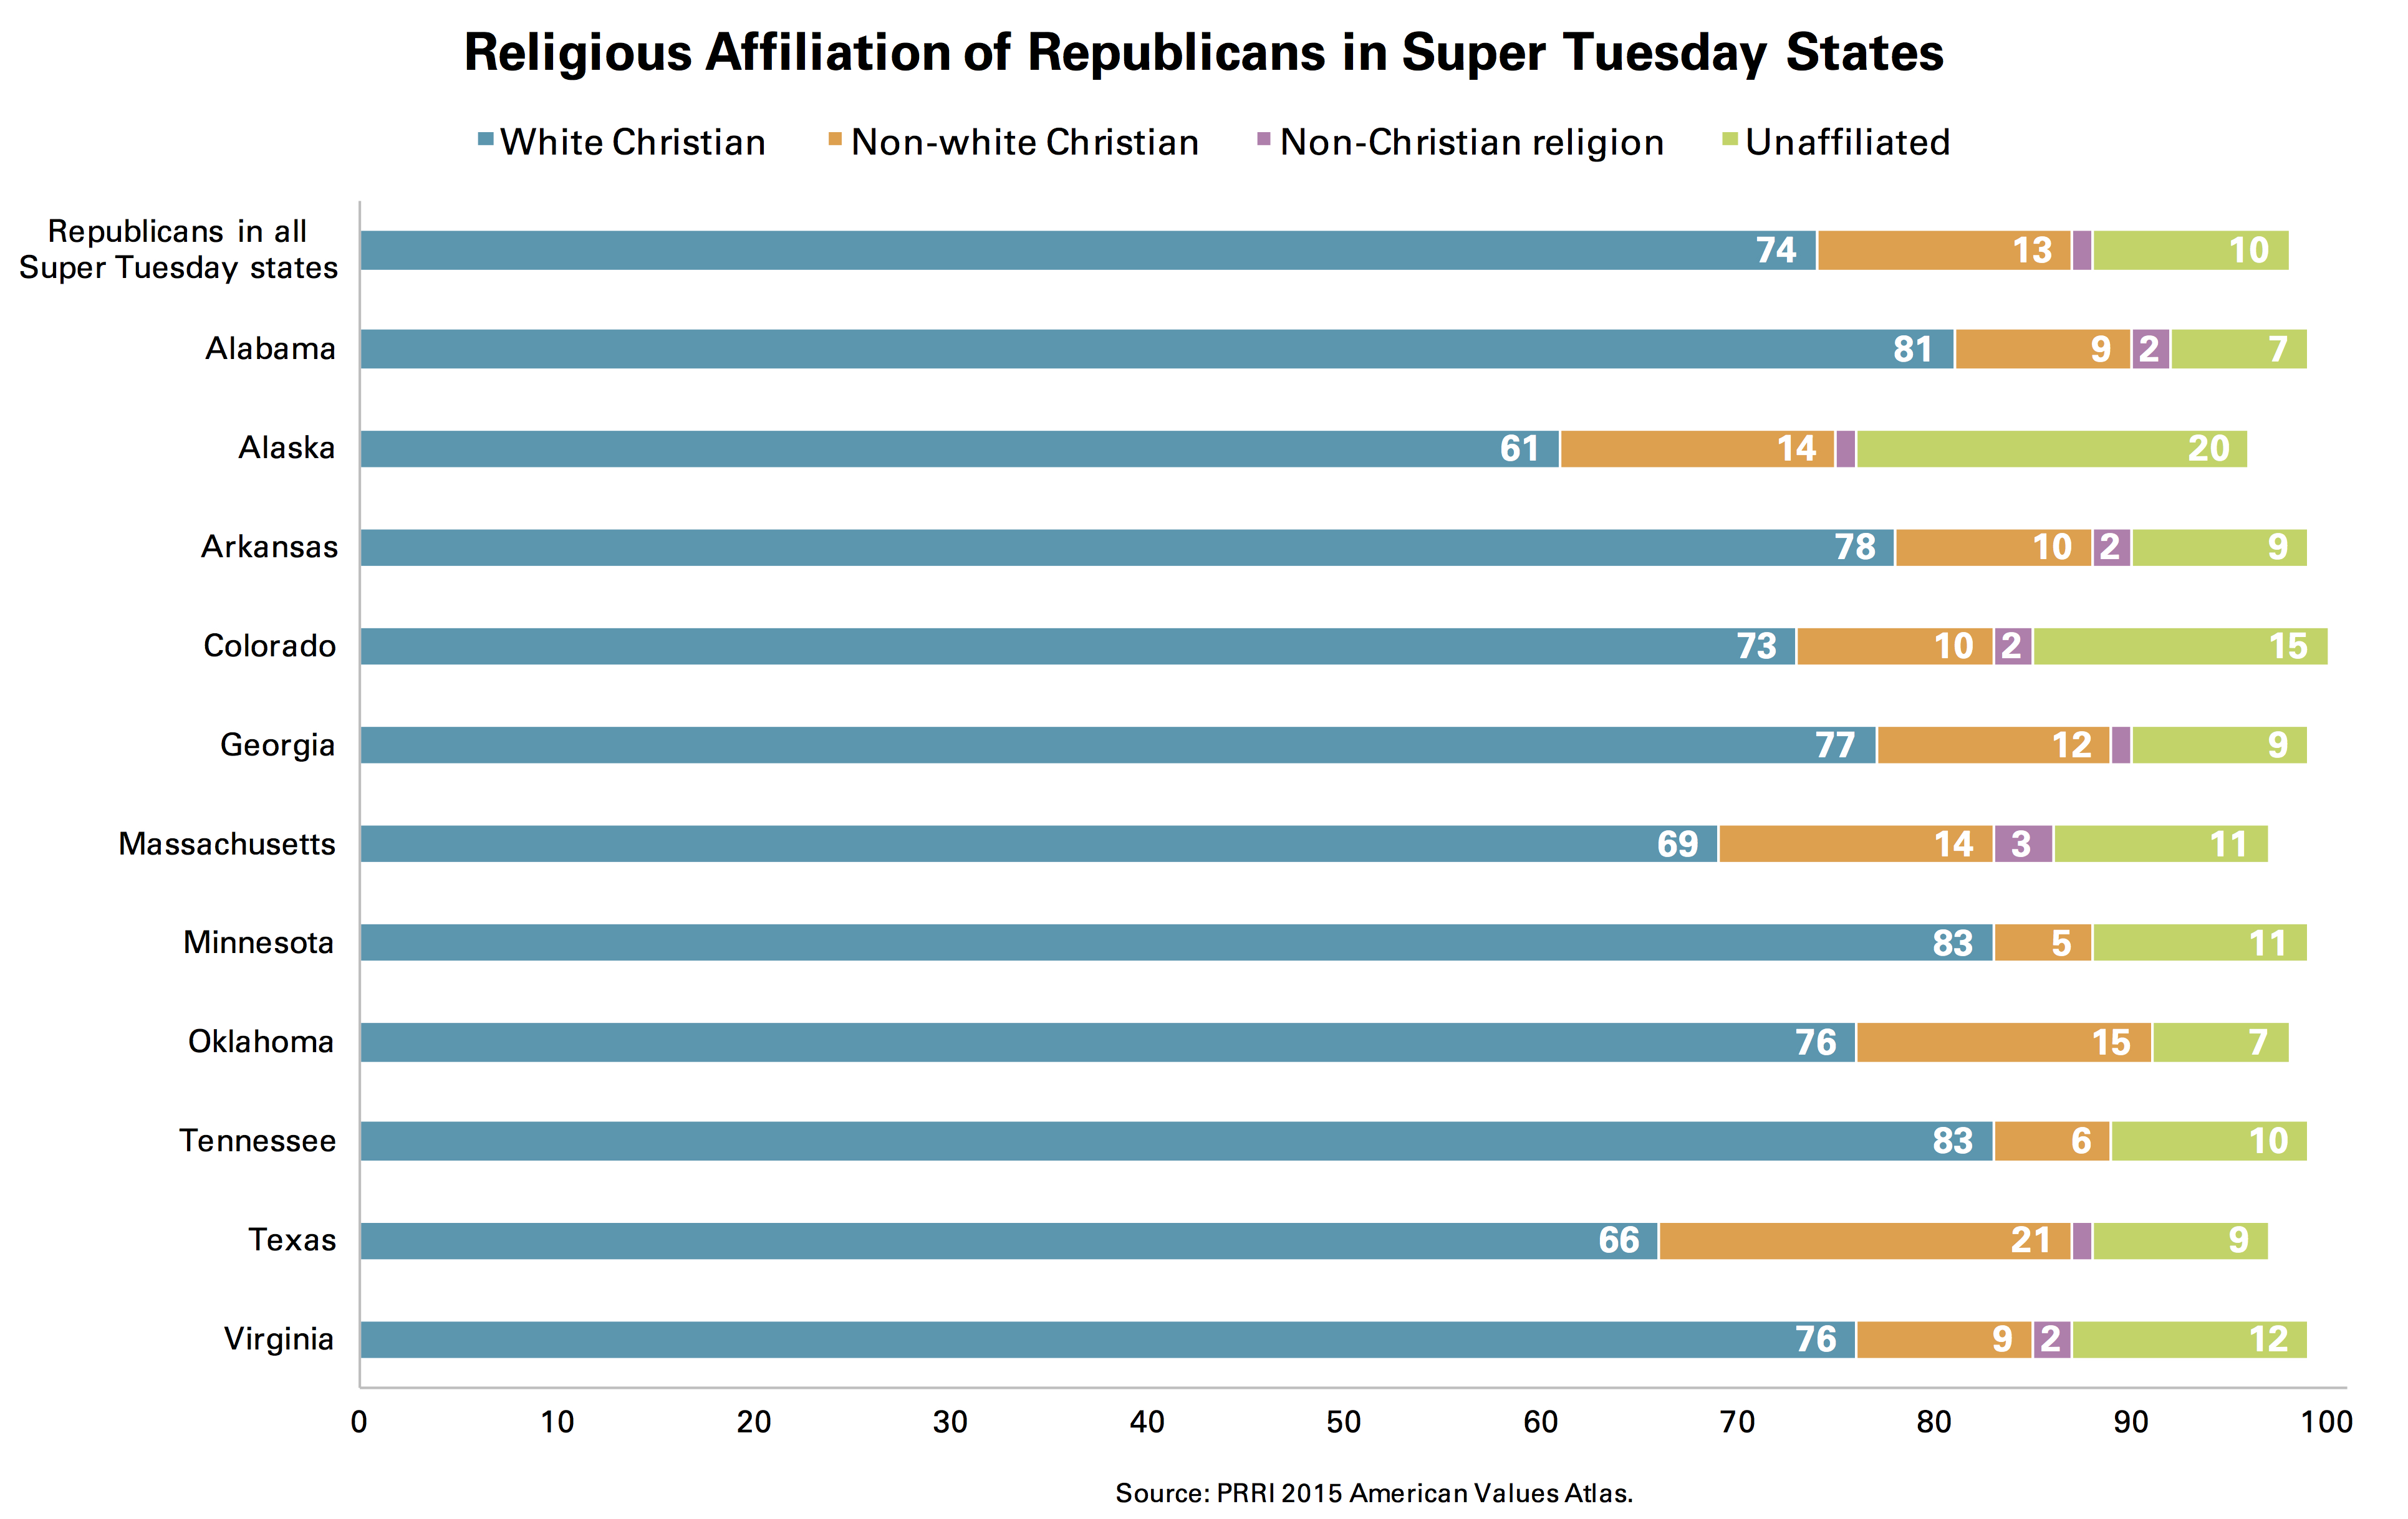 http://publicreligion.org/site/wp-content/uploads/2016/02/PRRI-Religious-Affiliation-Republicans-Super-Tuesday.jpg